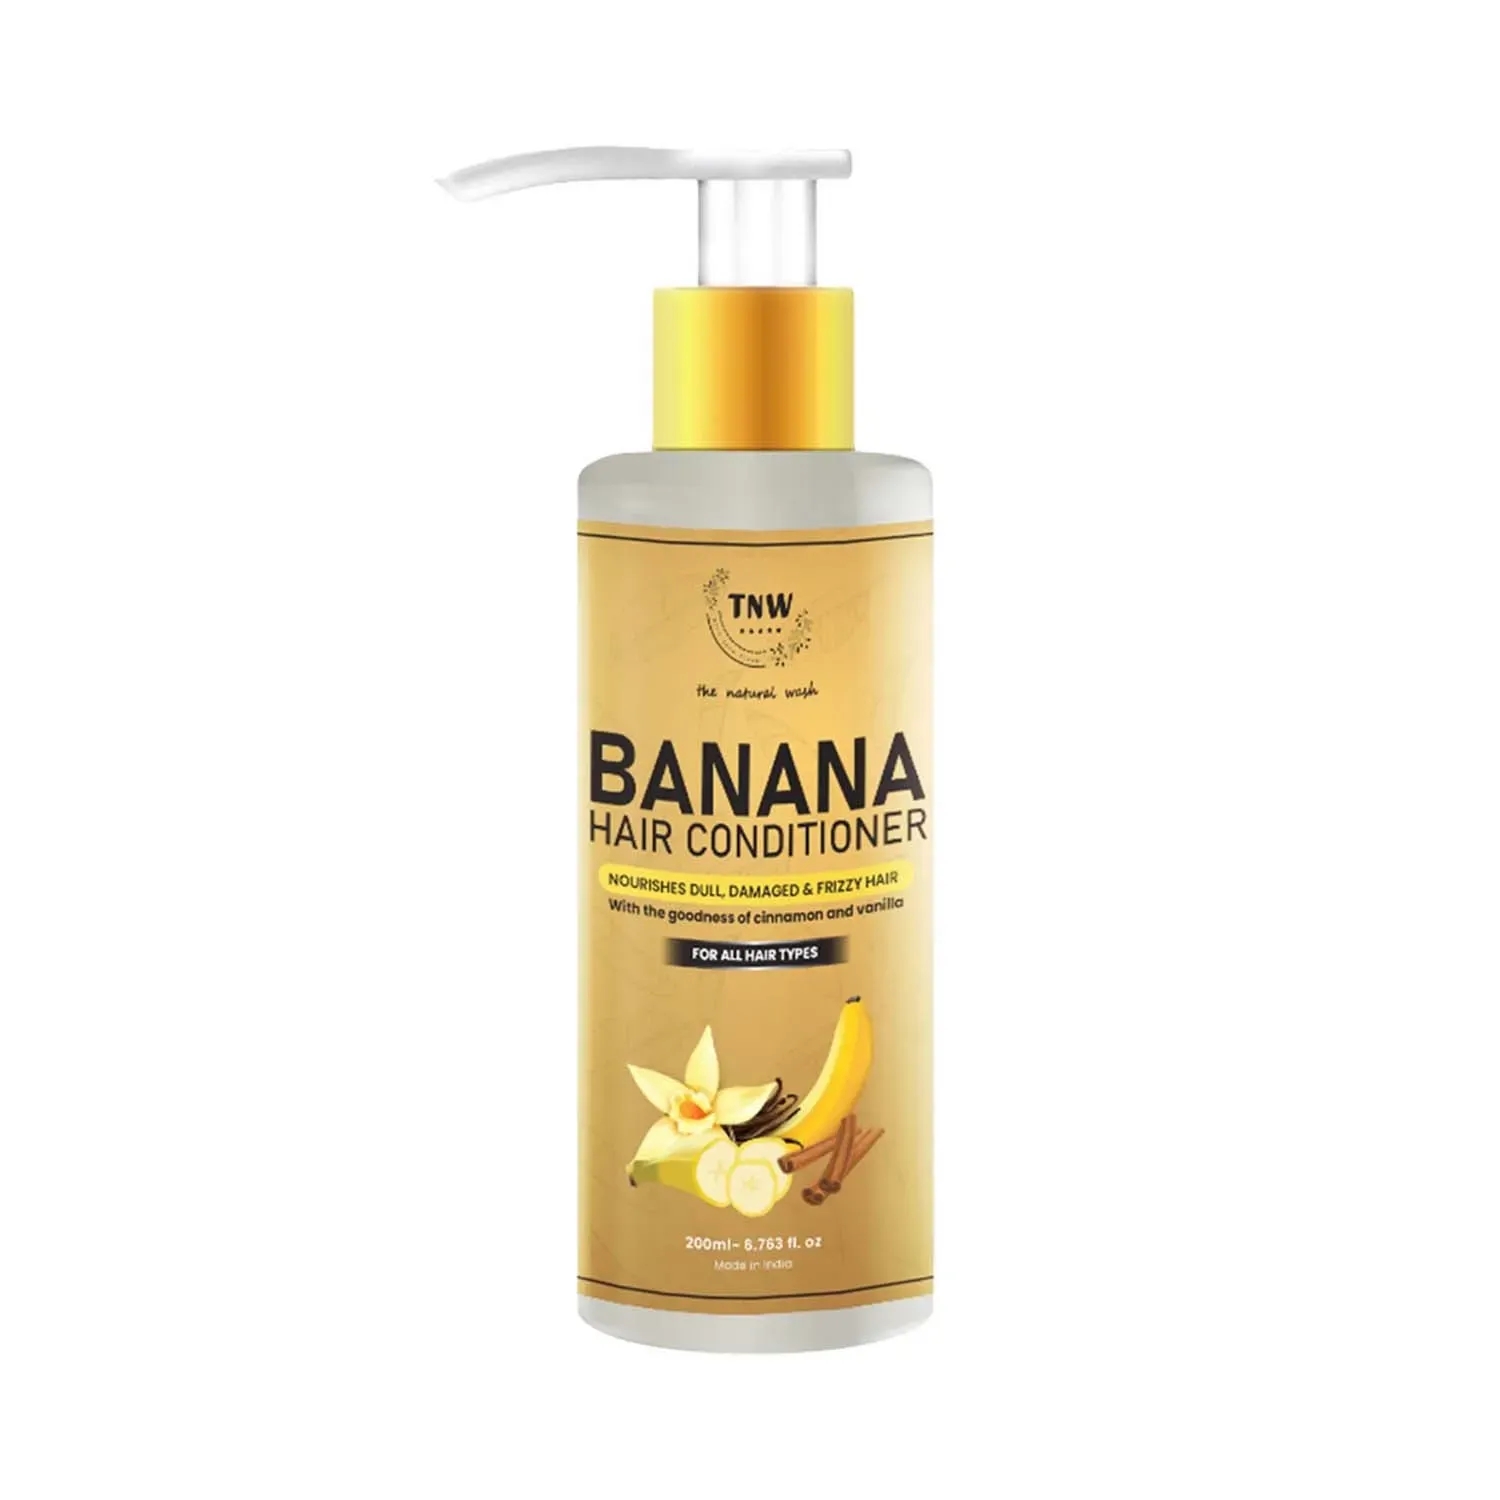 TNW The Natural Wash | TNW The Natural Wash Banana Hair Conditioner (200ml)